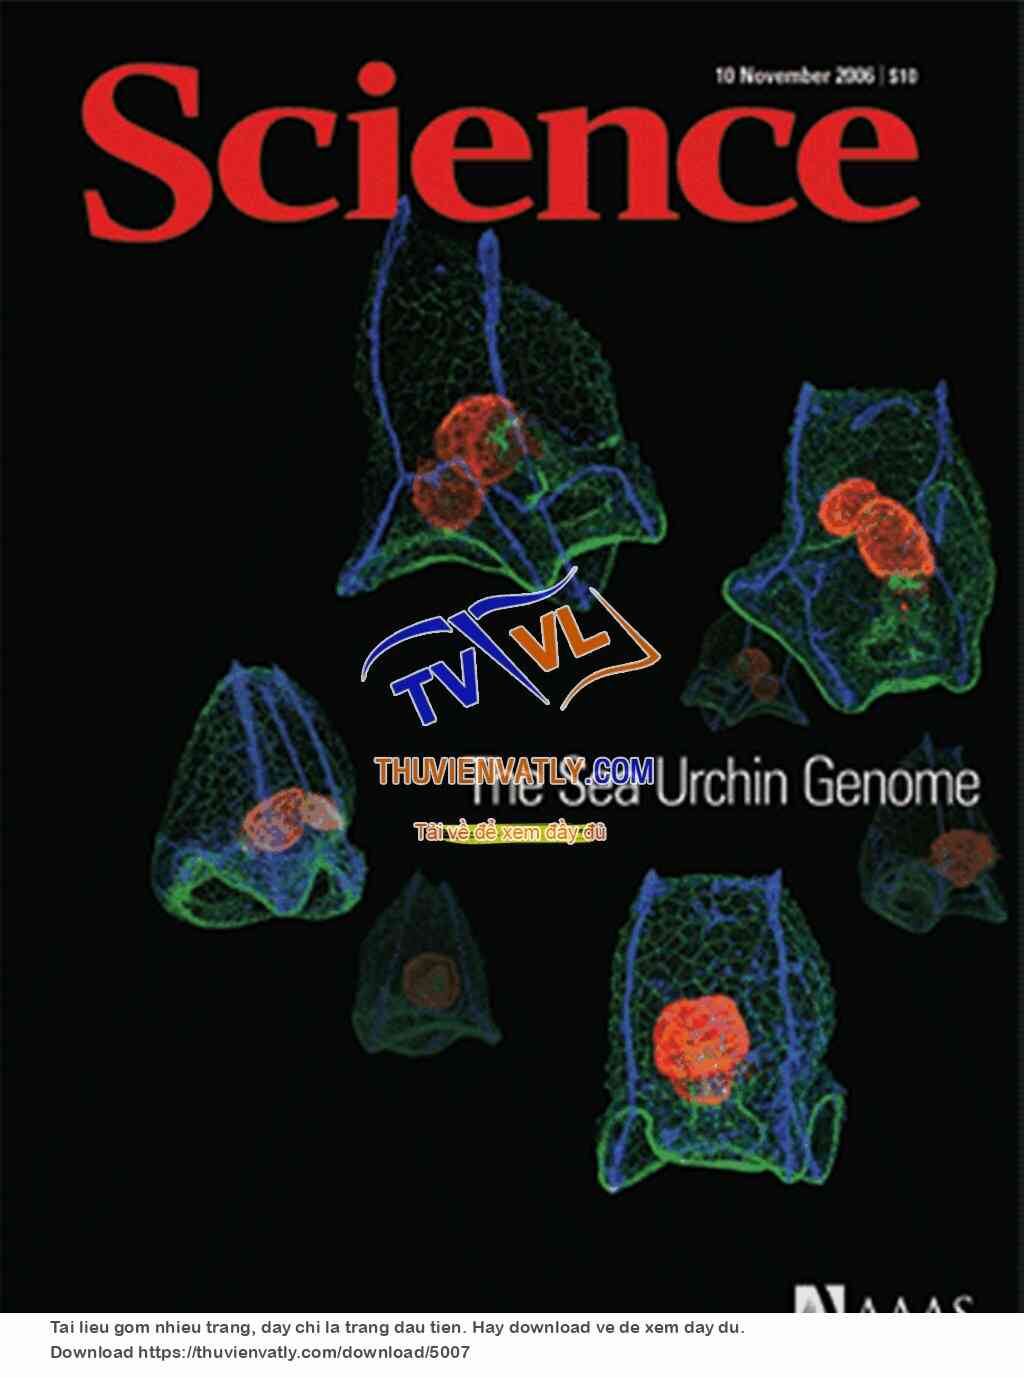 Science Magazine_2006-11-10